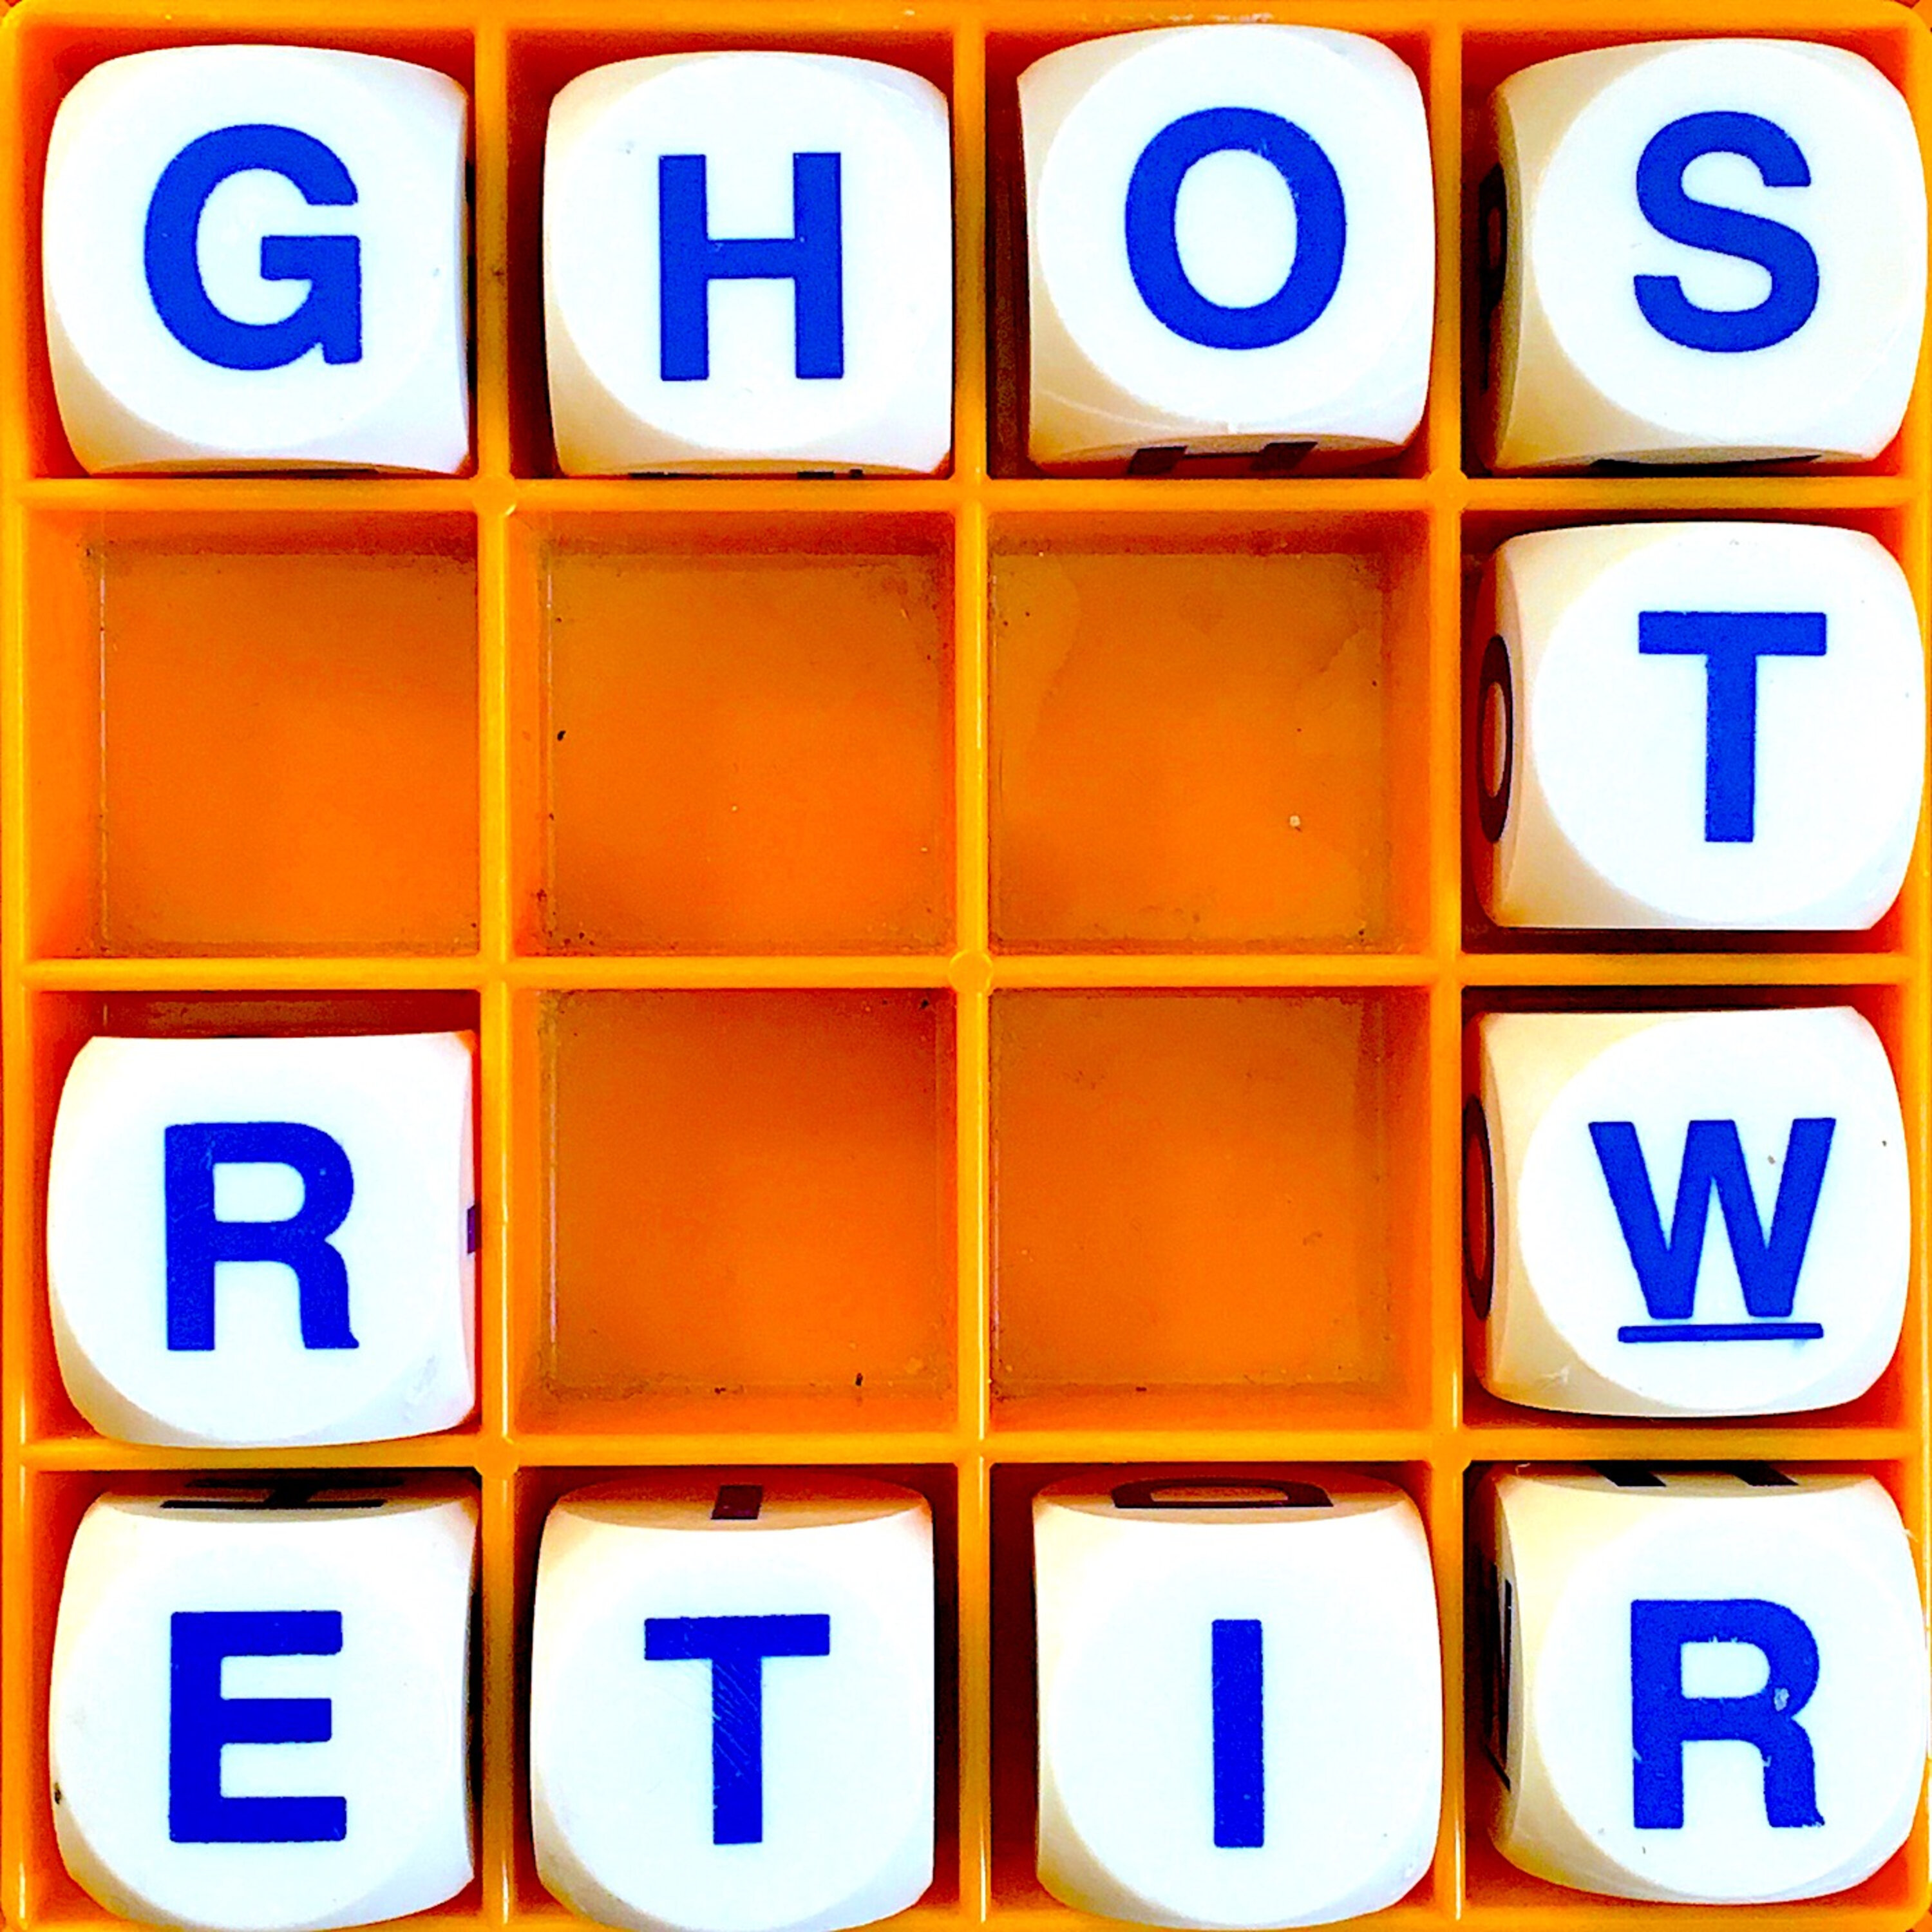 Thumbnail for "122. Ghostwriter".